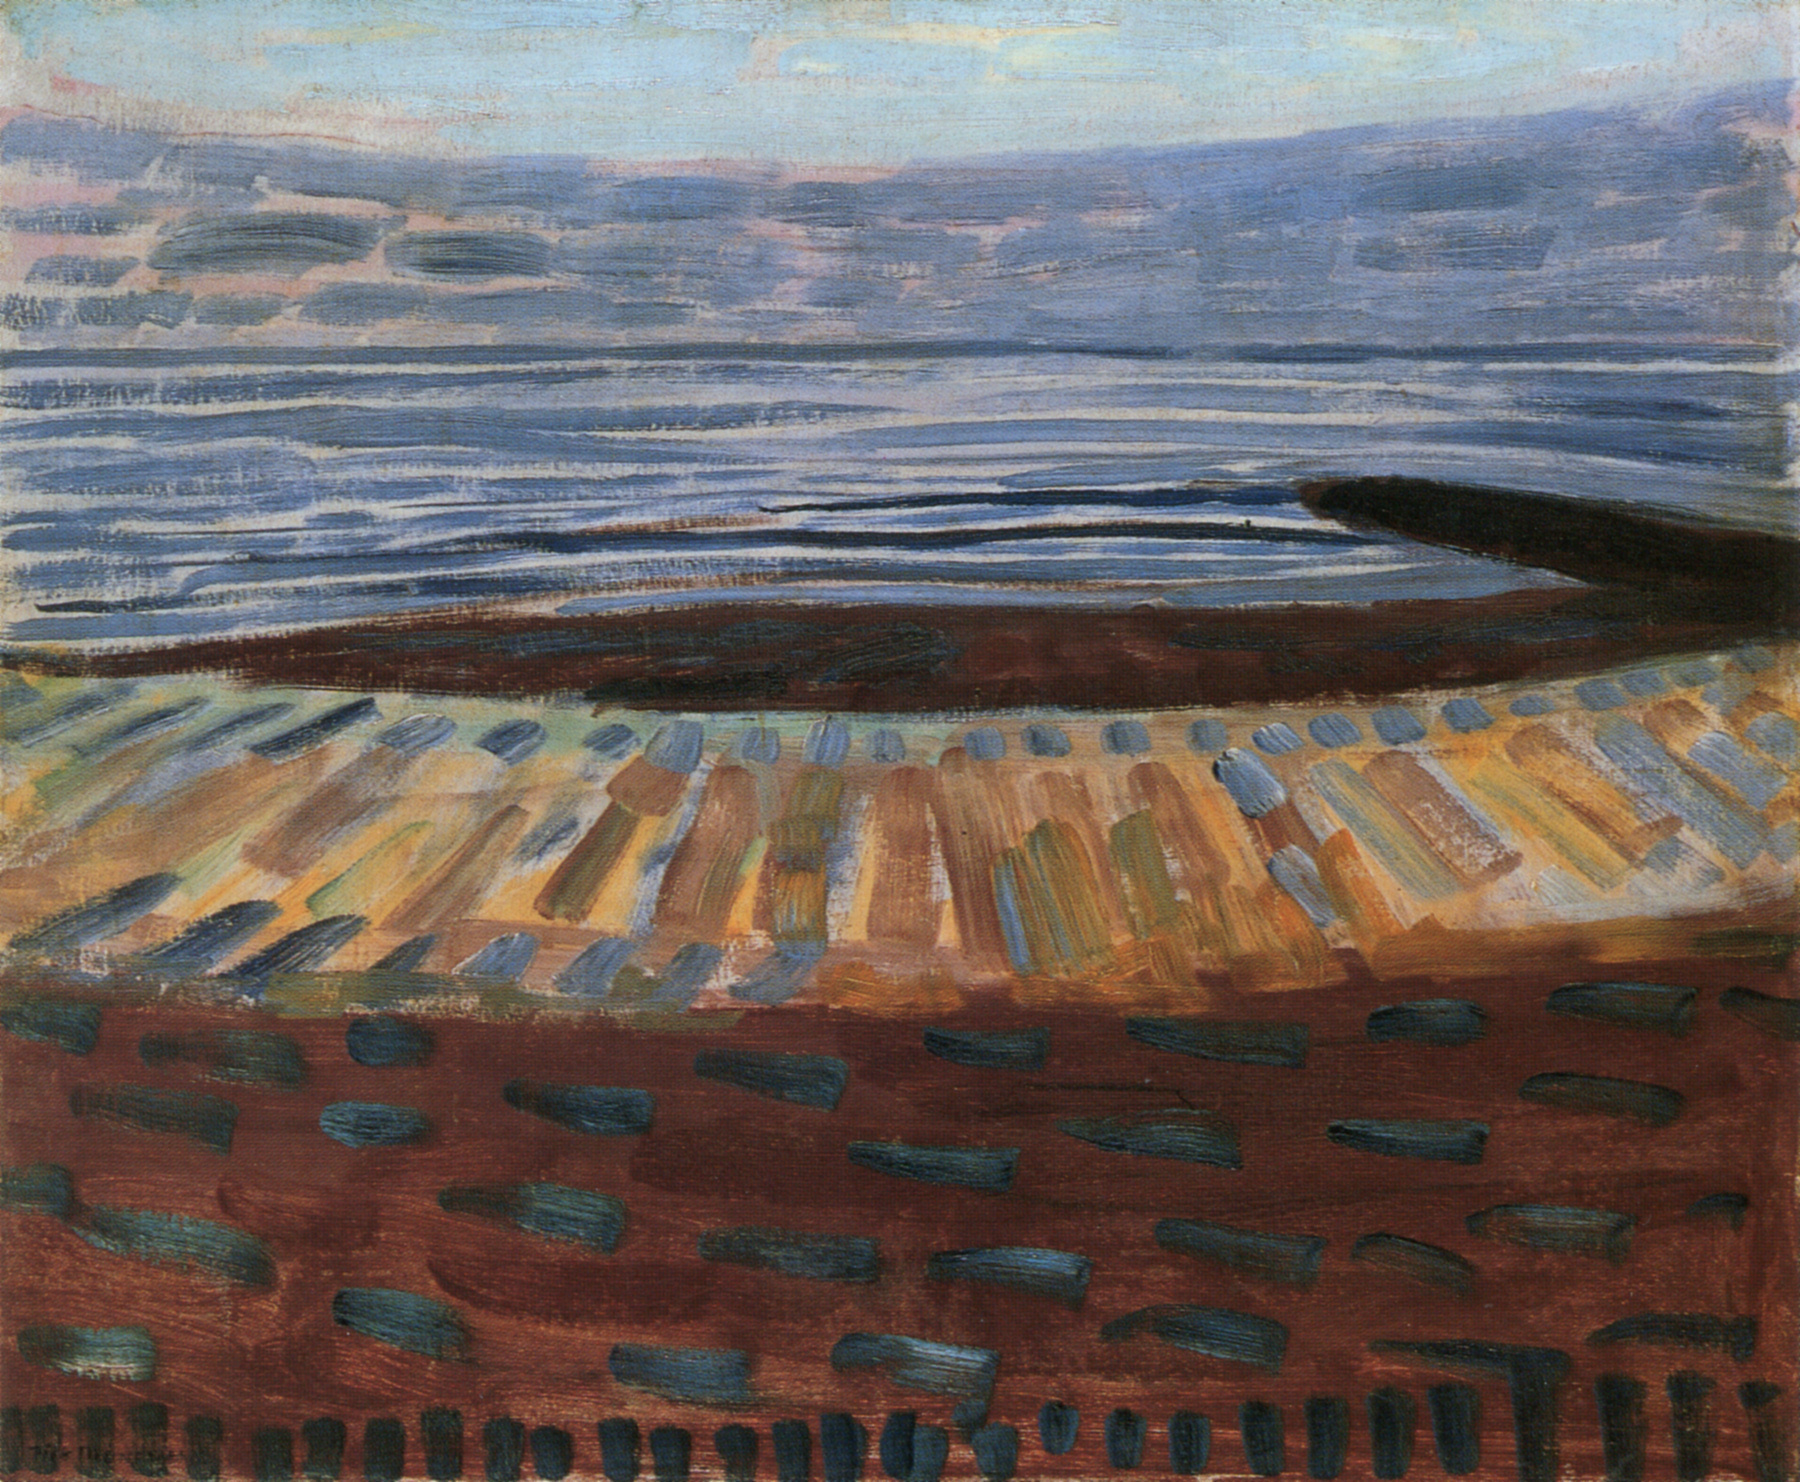 Pit Mondrian (Sea after Sunset)